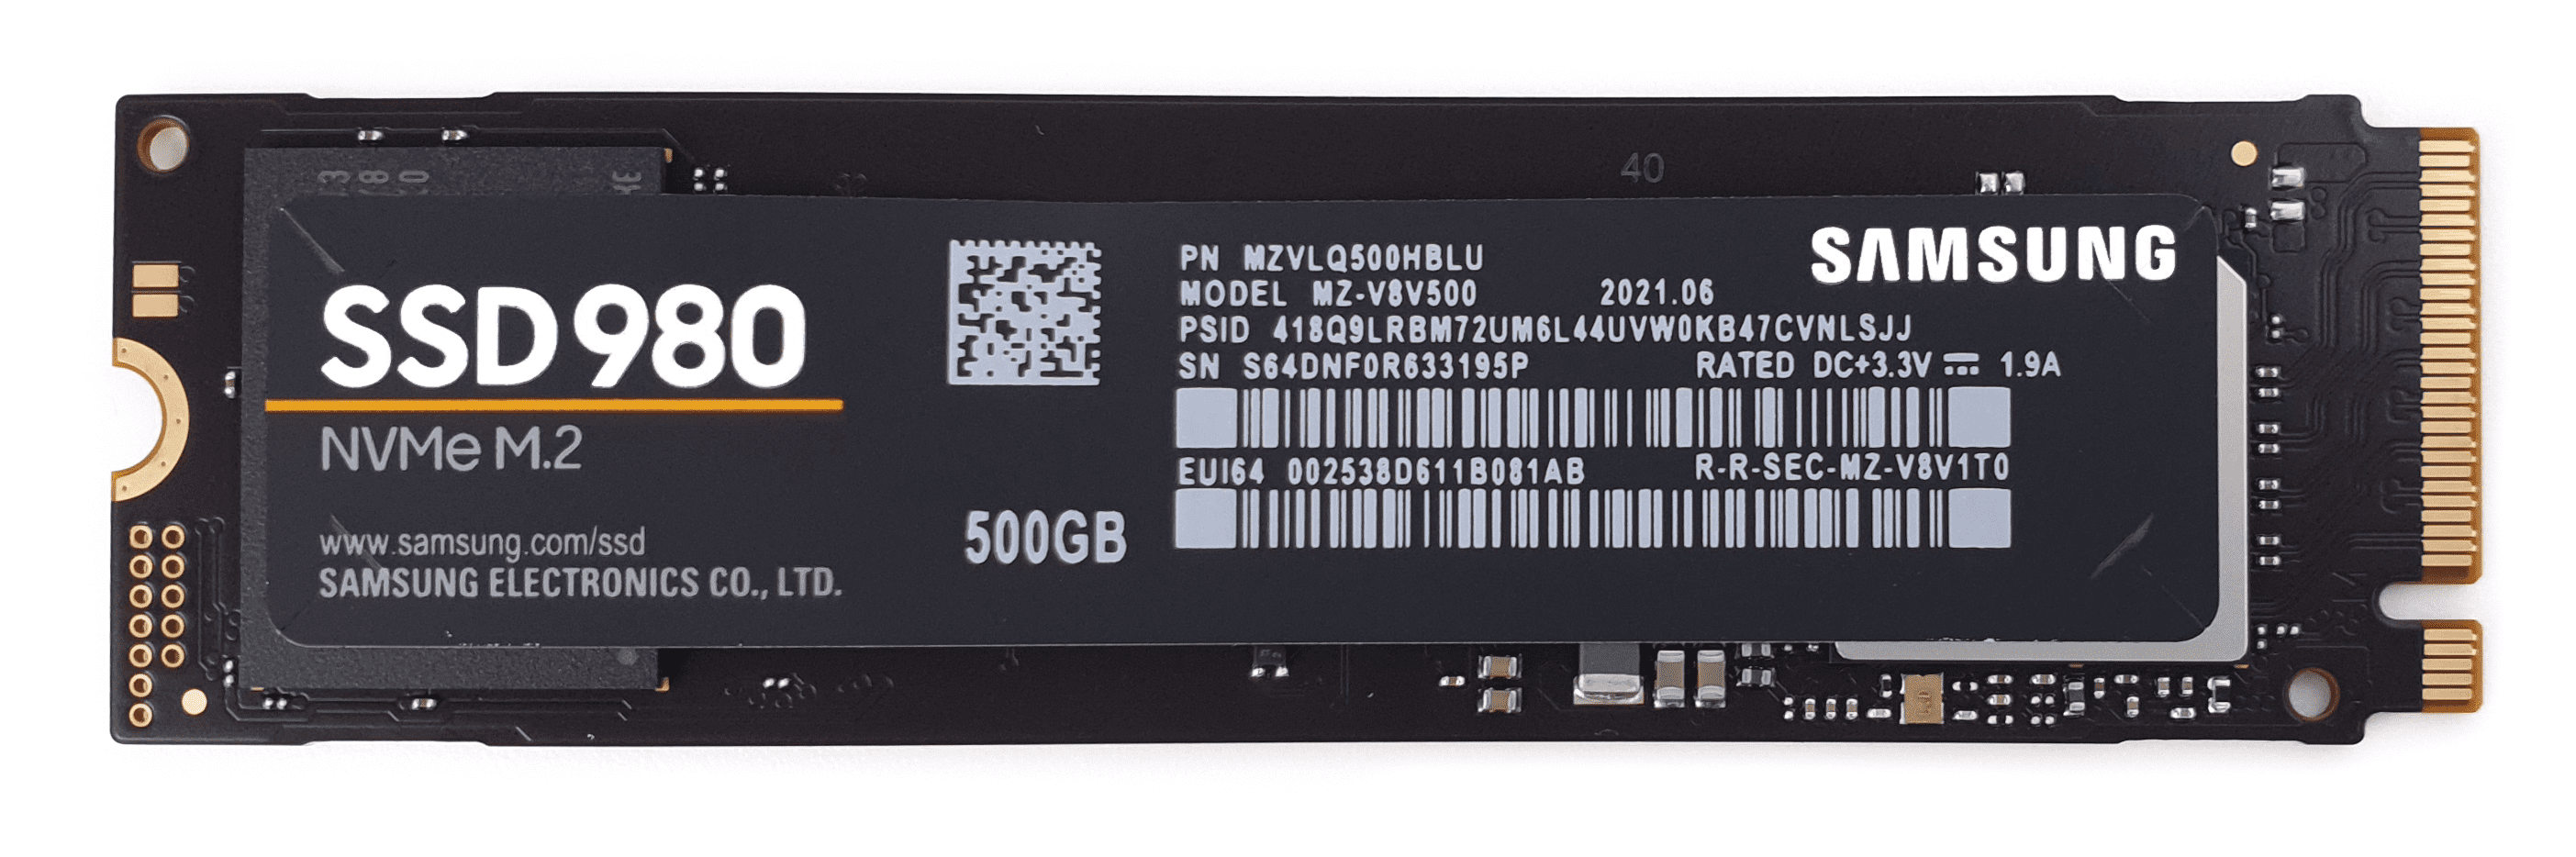 Samsung 980 500gb. Samsung SSD 980. Samsung NVME 980 500gb. Samsung SSD 980 500gb. M.2 накопитель Samsung 980.